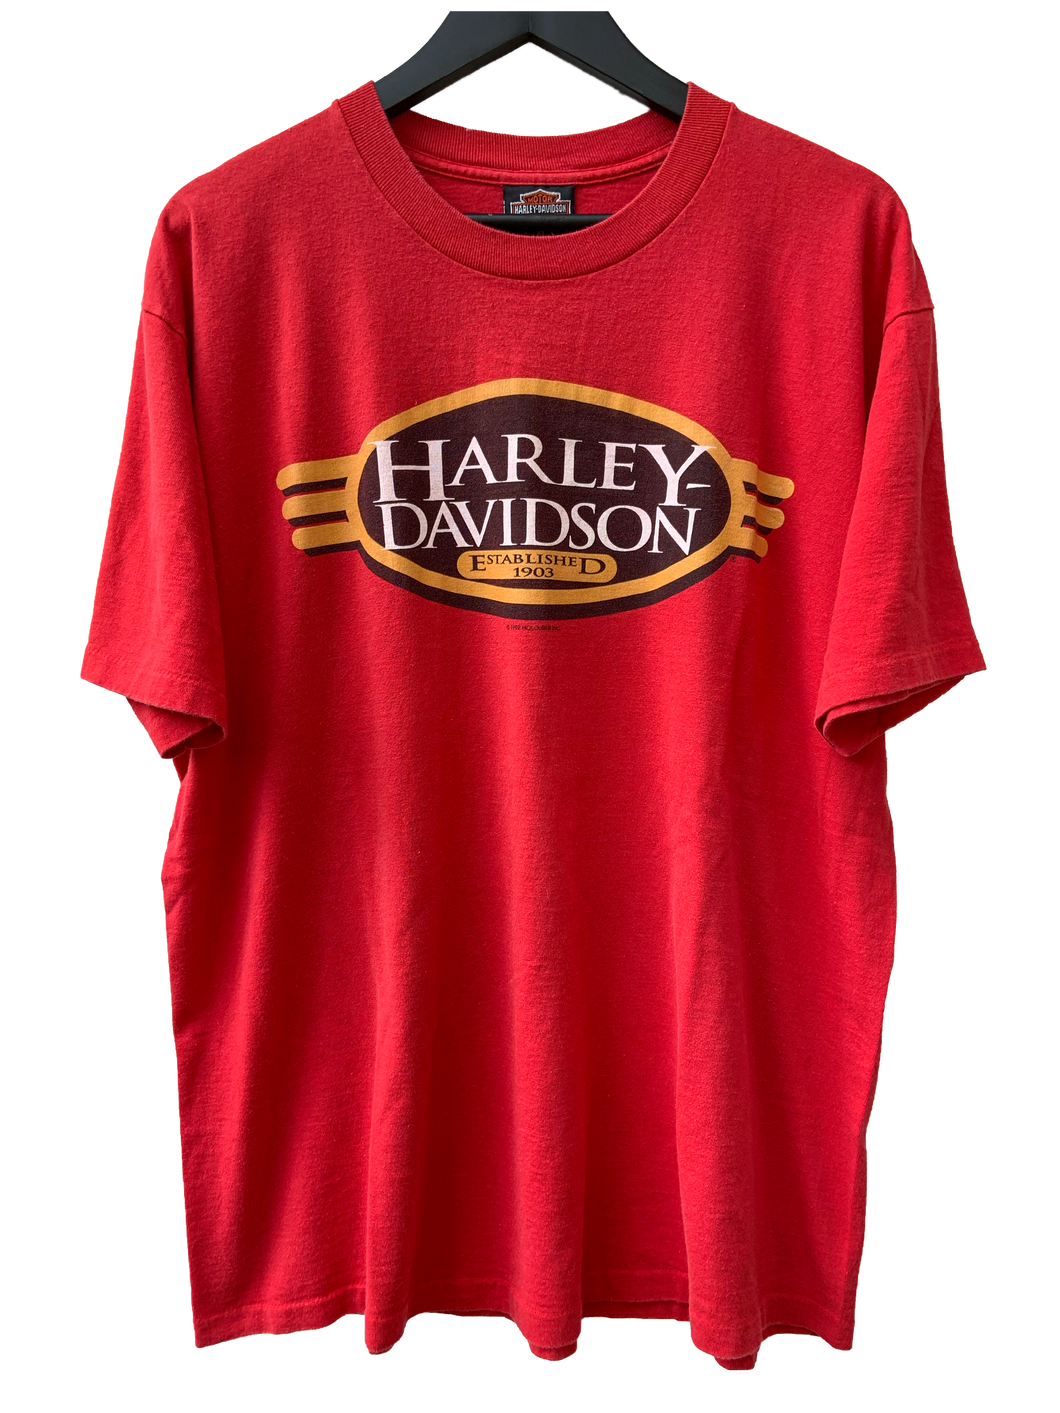 1992 HARLEY DAVIDSON 'WEST COAST' SS TEE - XL